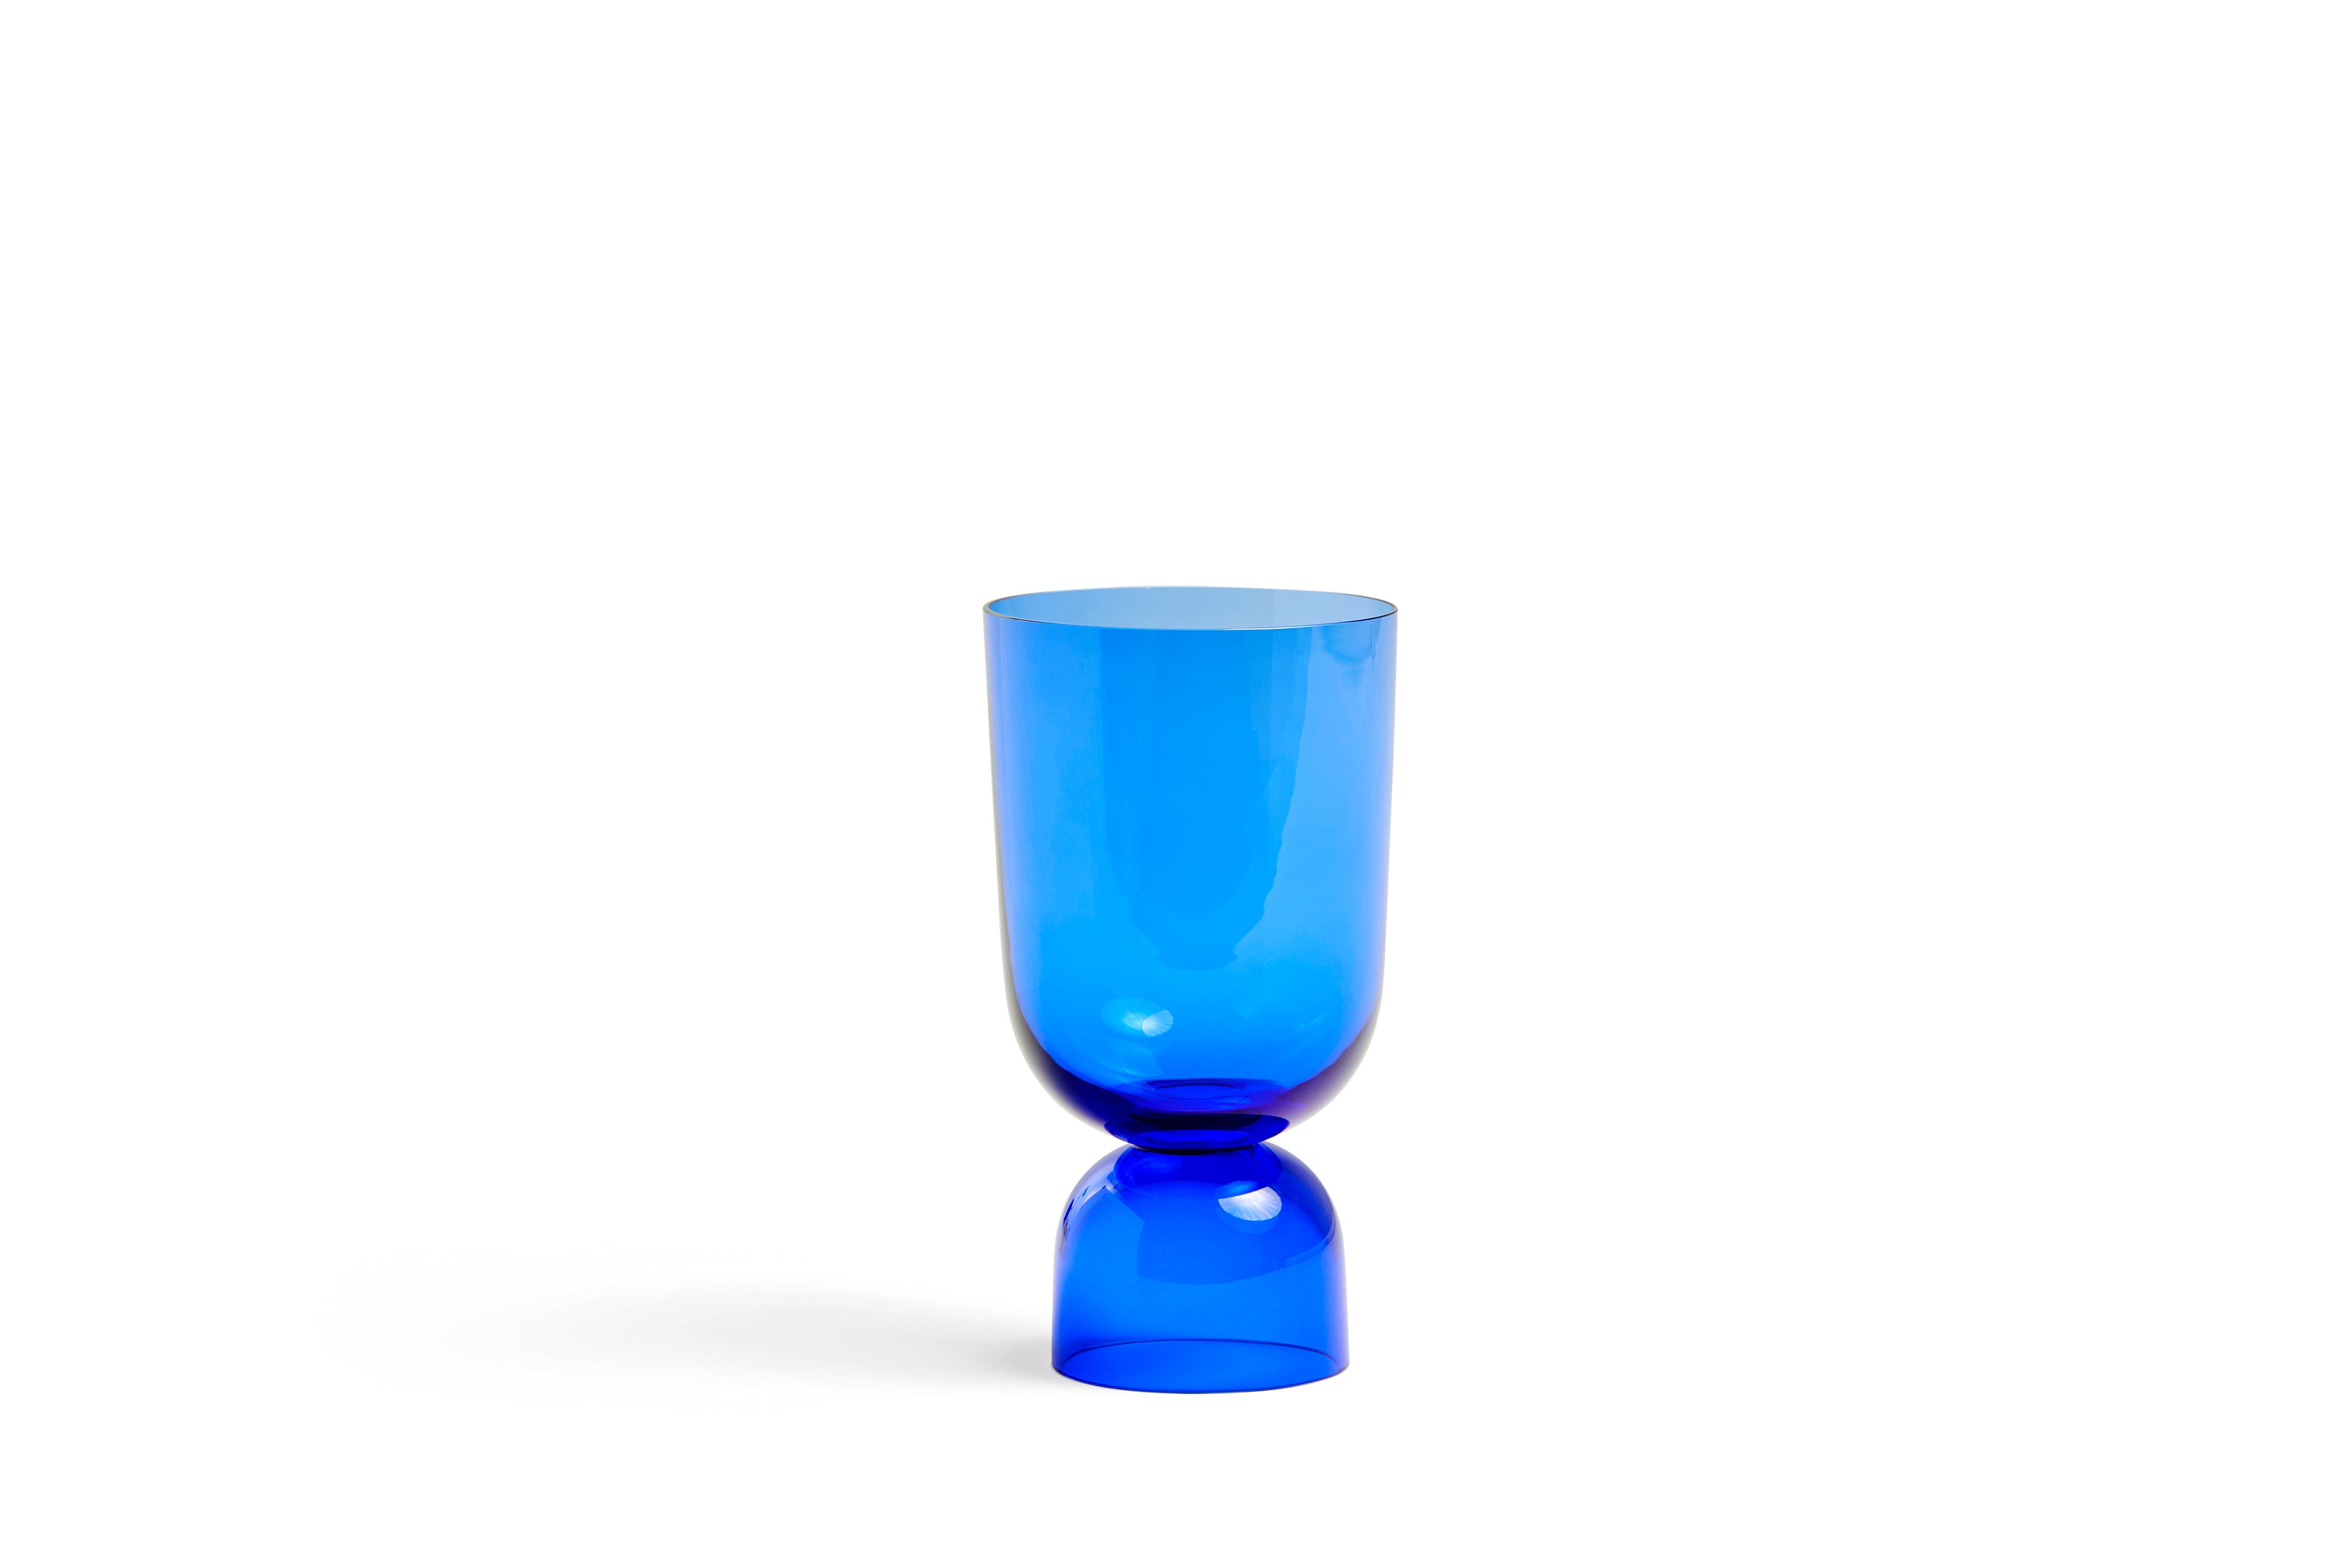 HAY Bottoms Up Vase